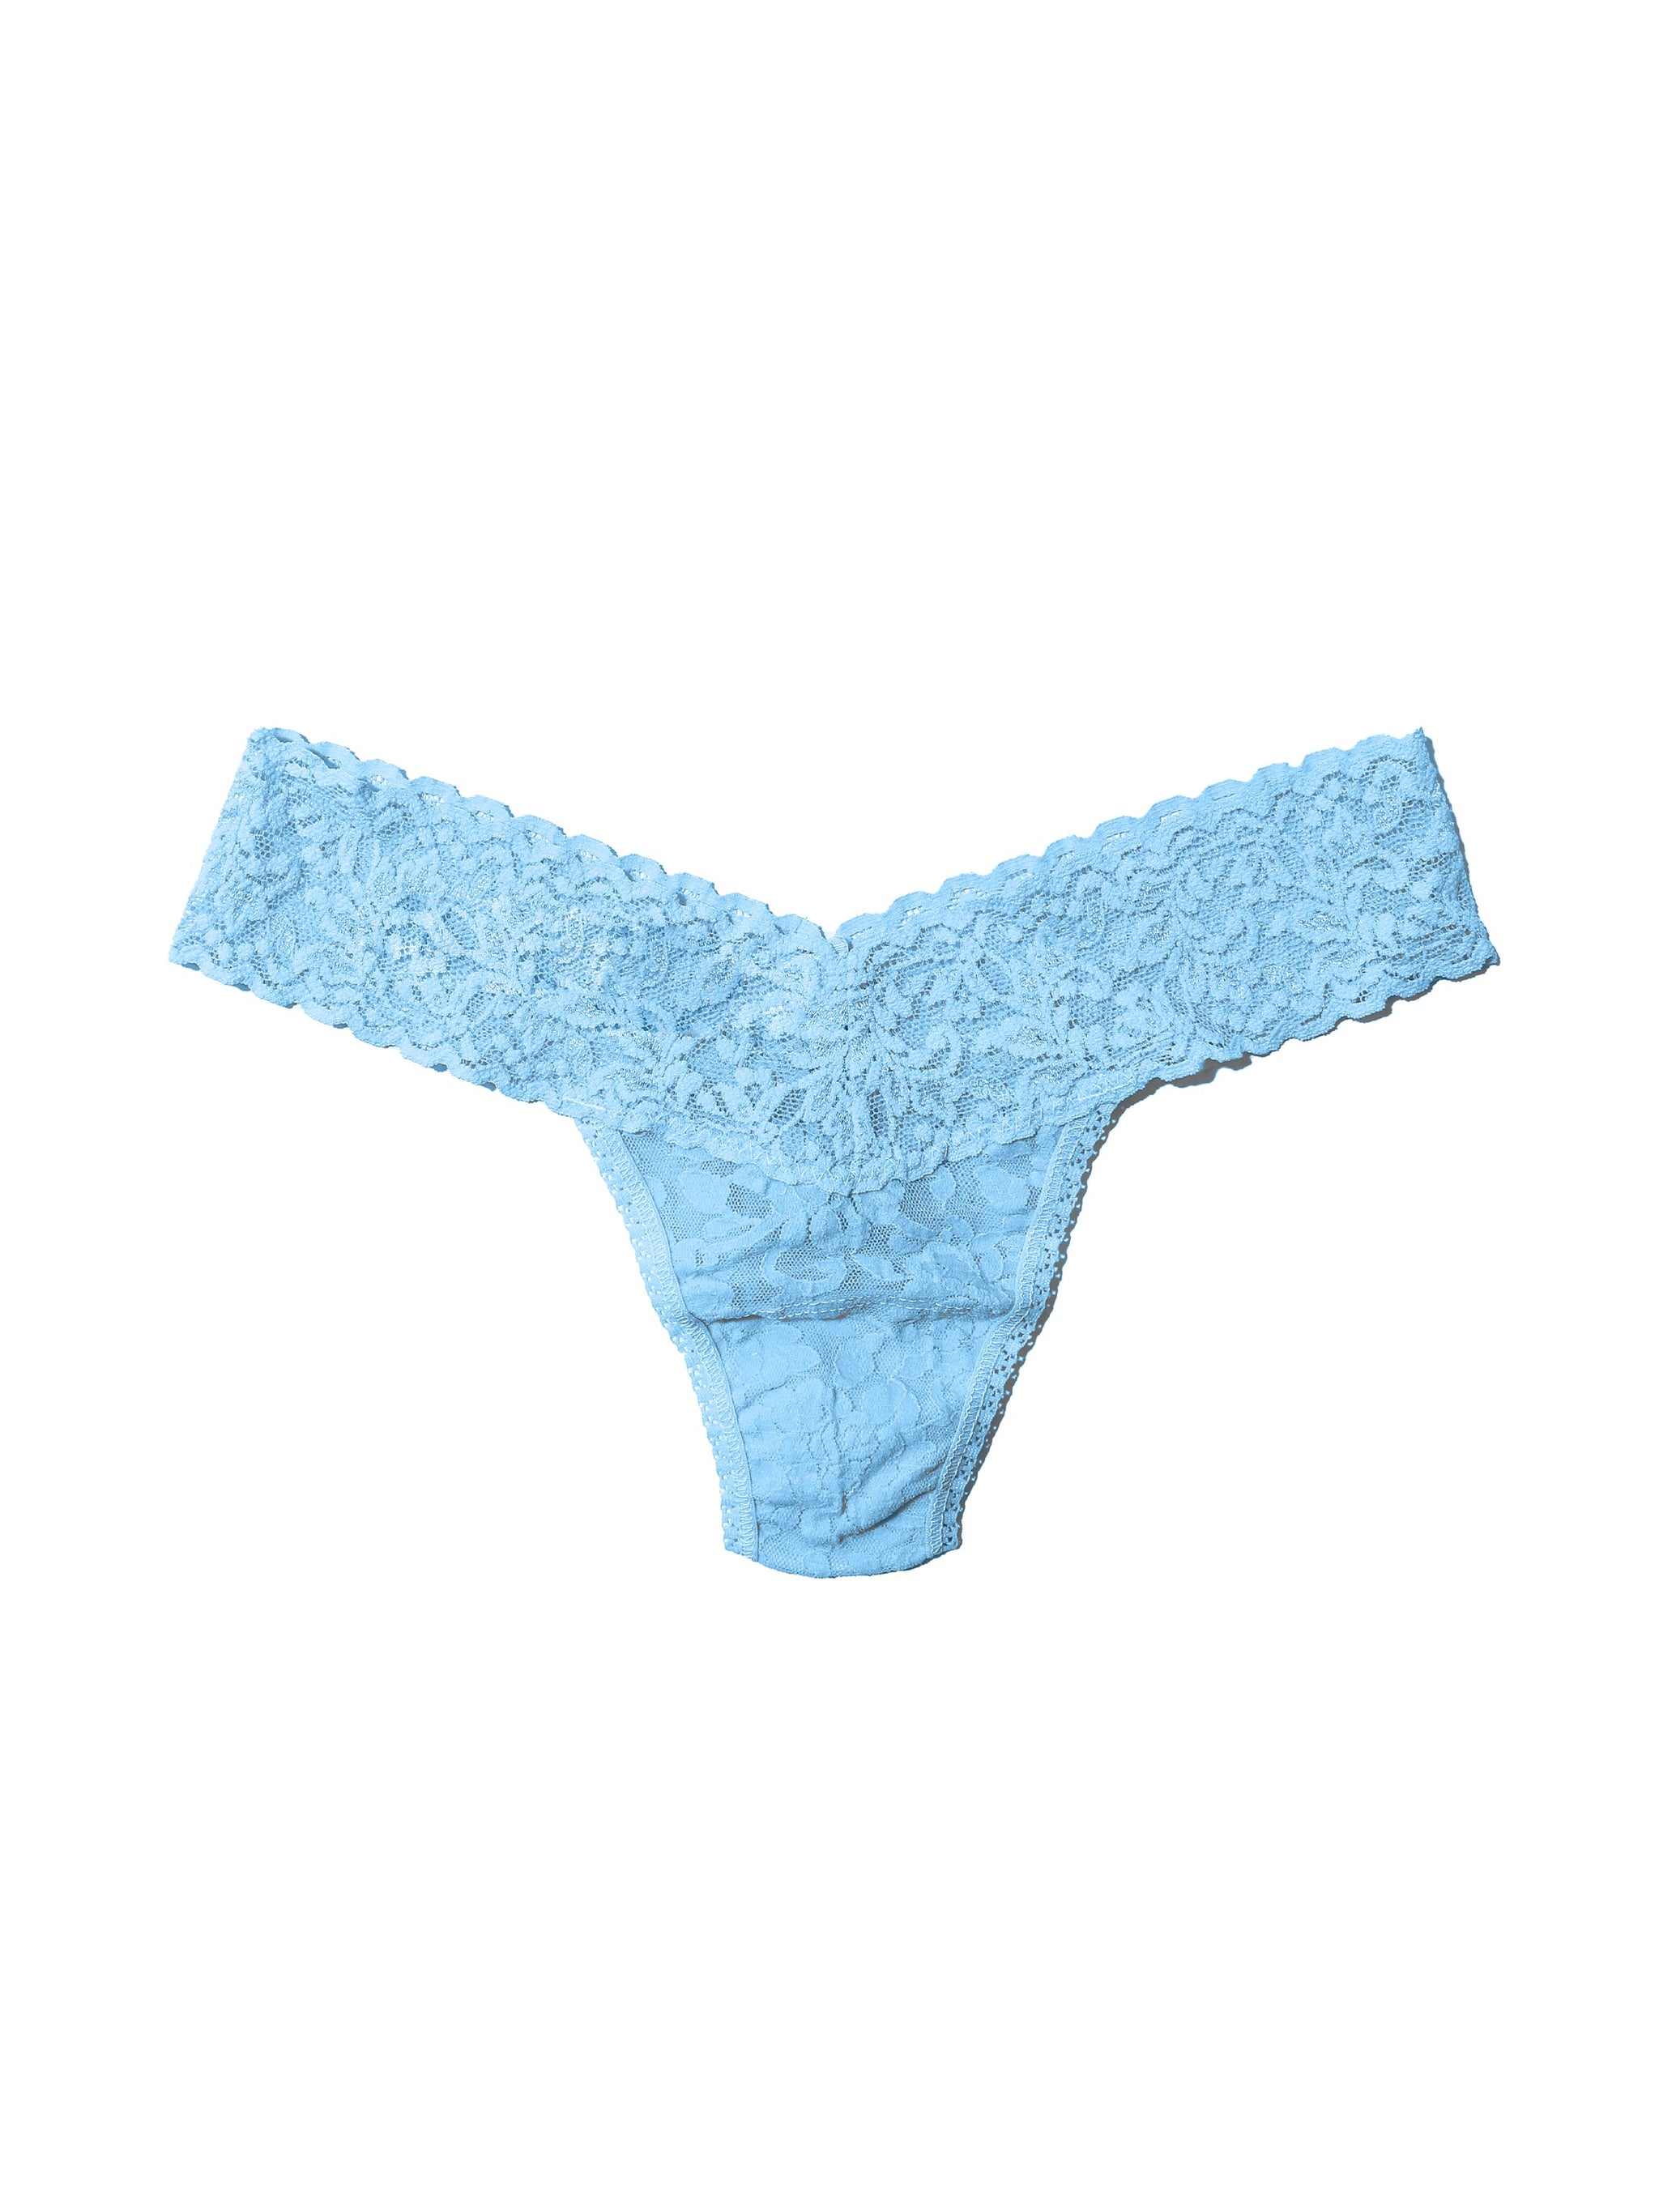 Petite Lace Underwear, Lace Thongs & Panties